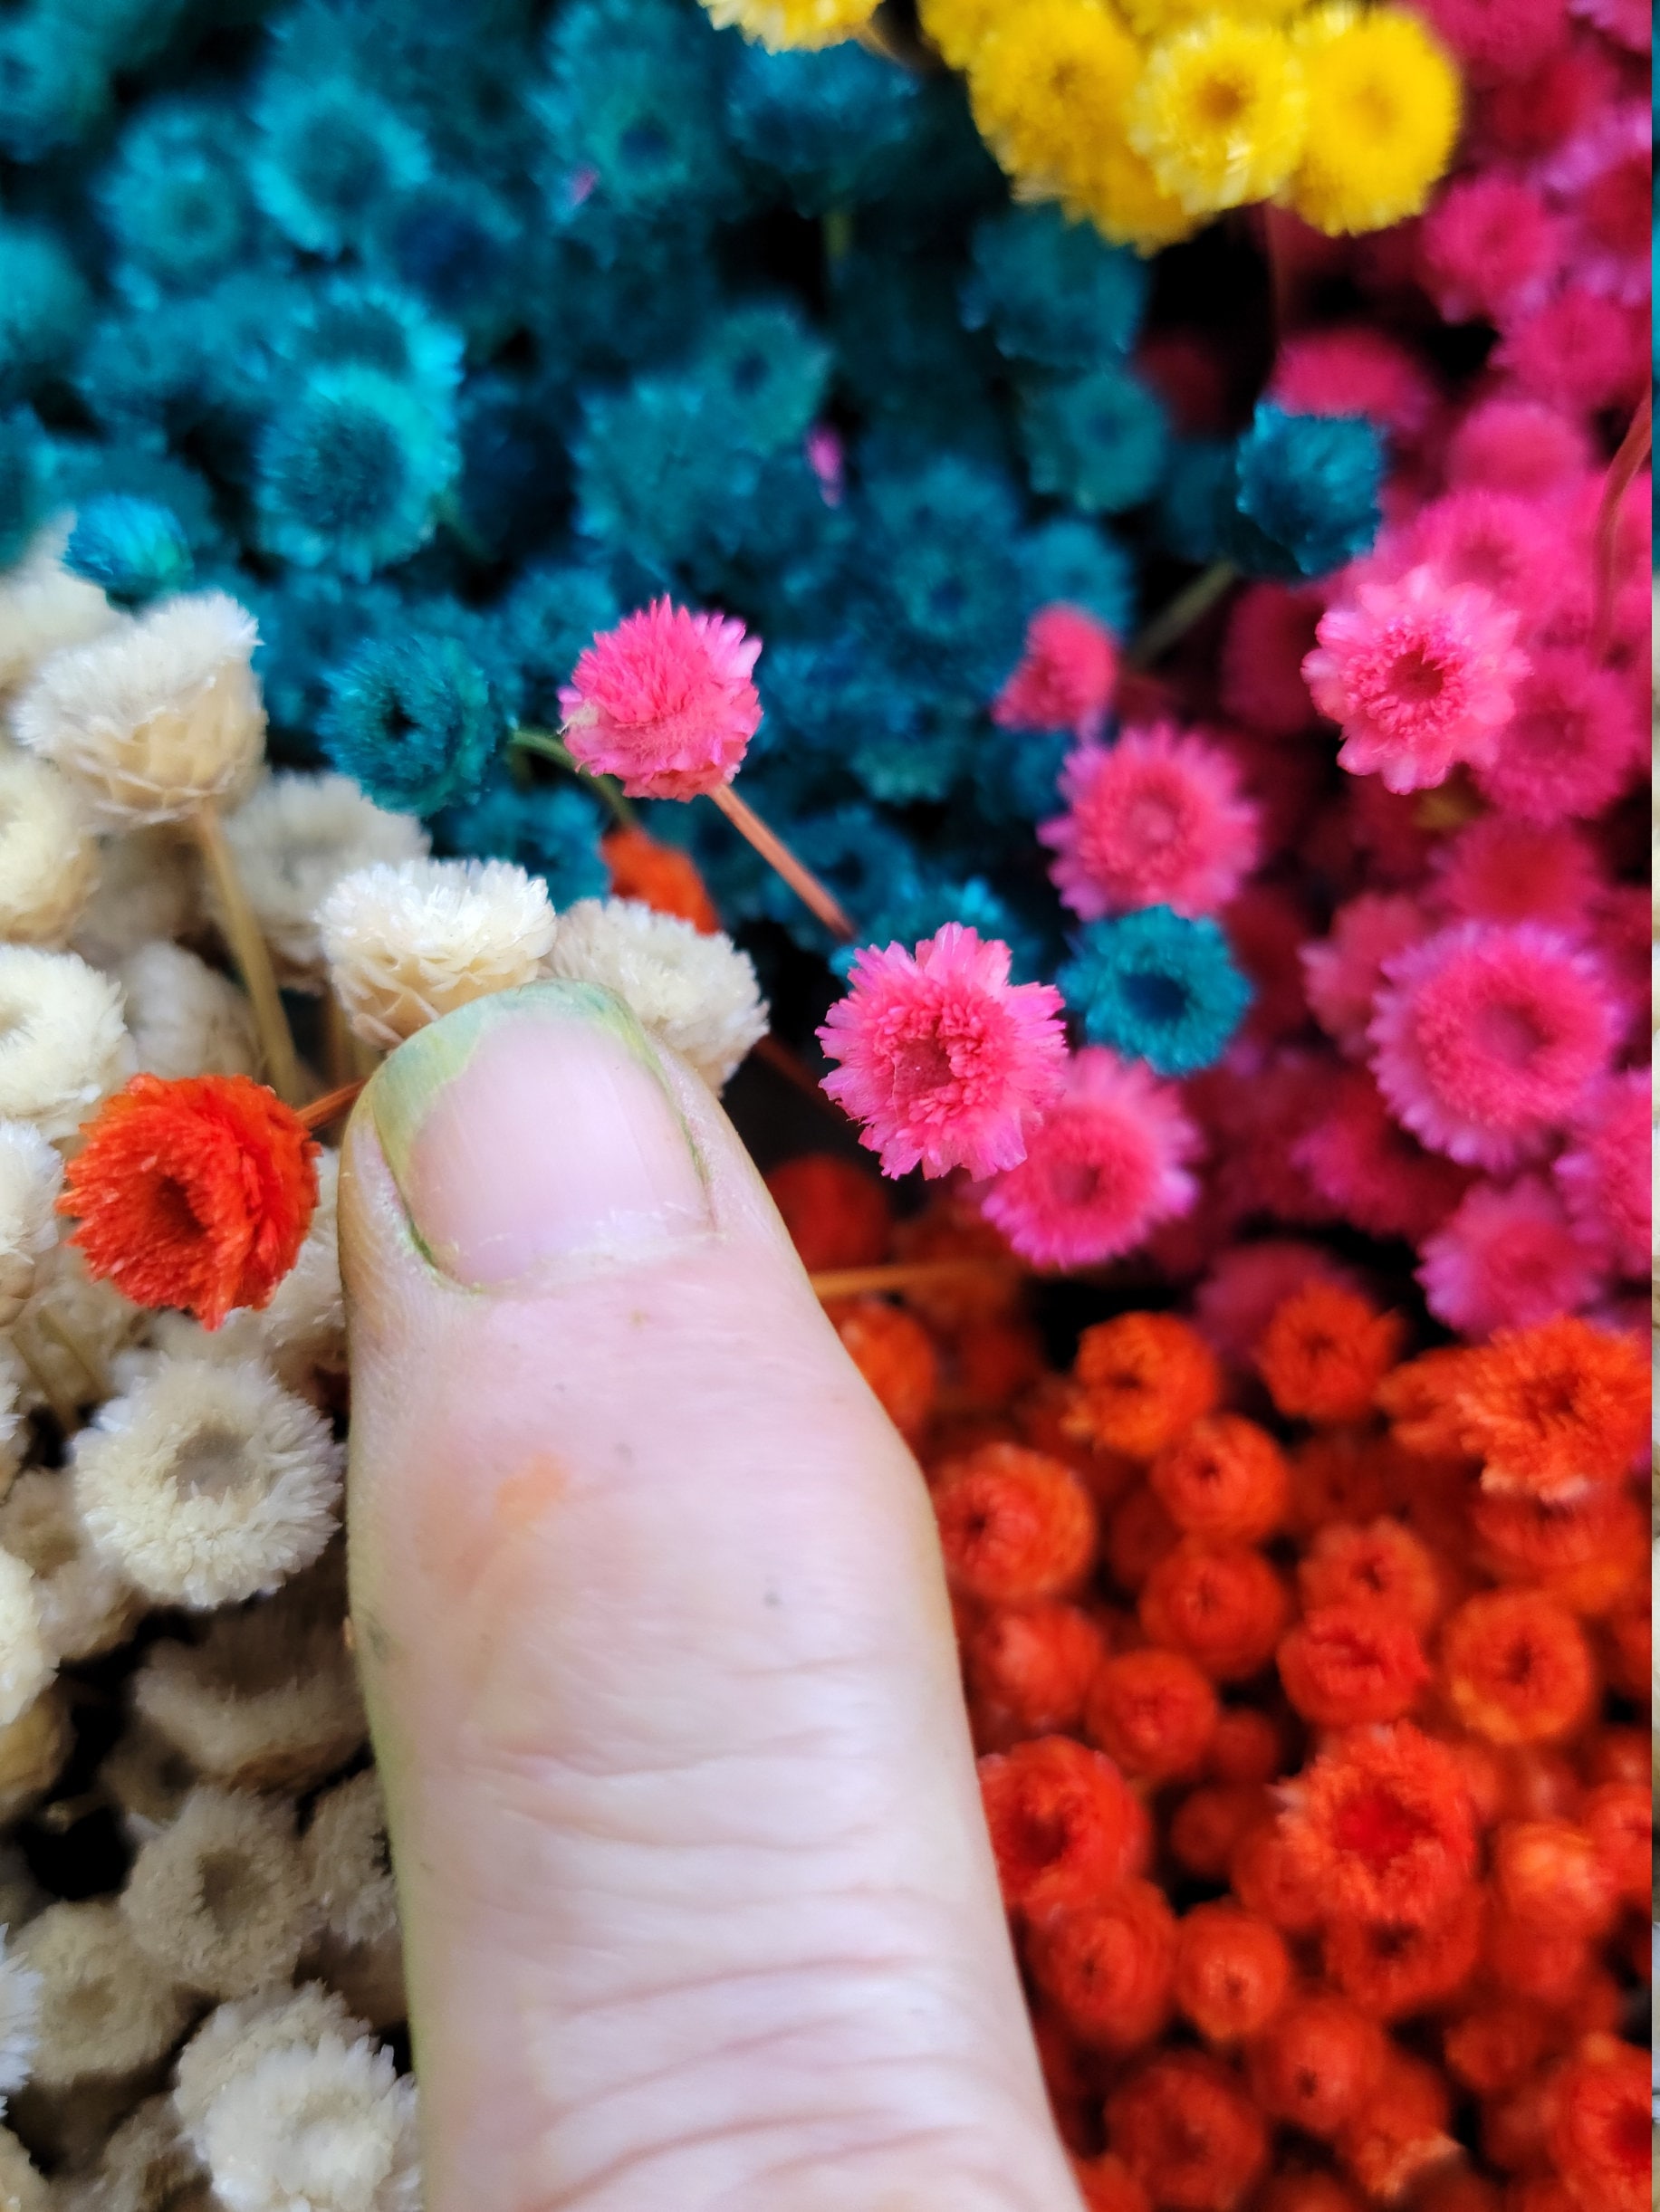 DECHOUS 100pcs Artificial Flower Miniature Boho Flowers Tiny Flowers for  Crafts Artificial Daisy Faux Flowers Decor for Home Lifelike Flower Heads